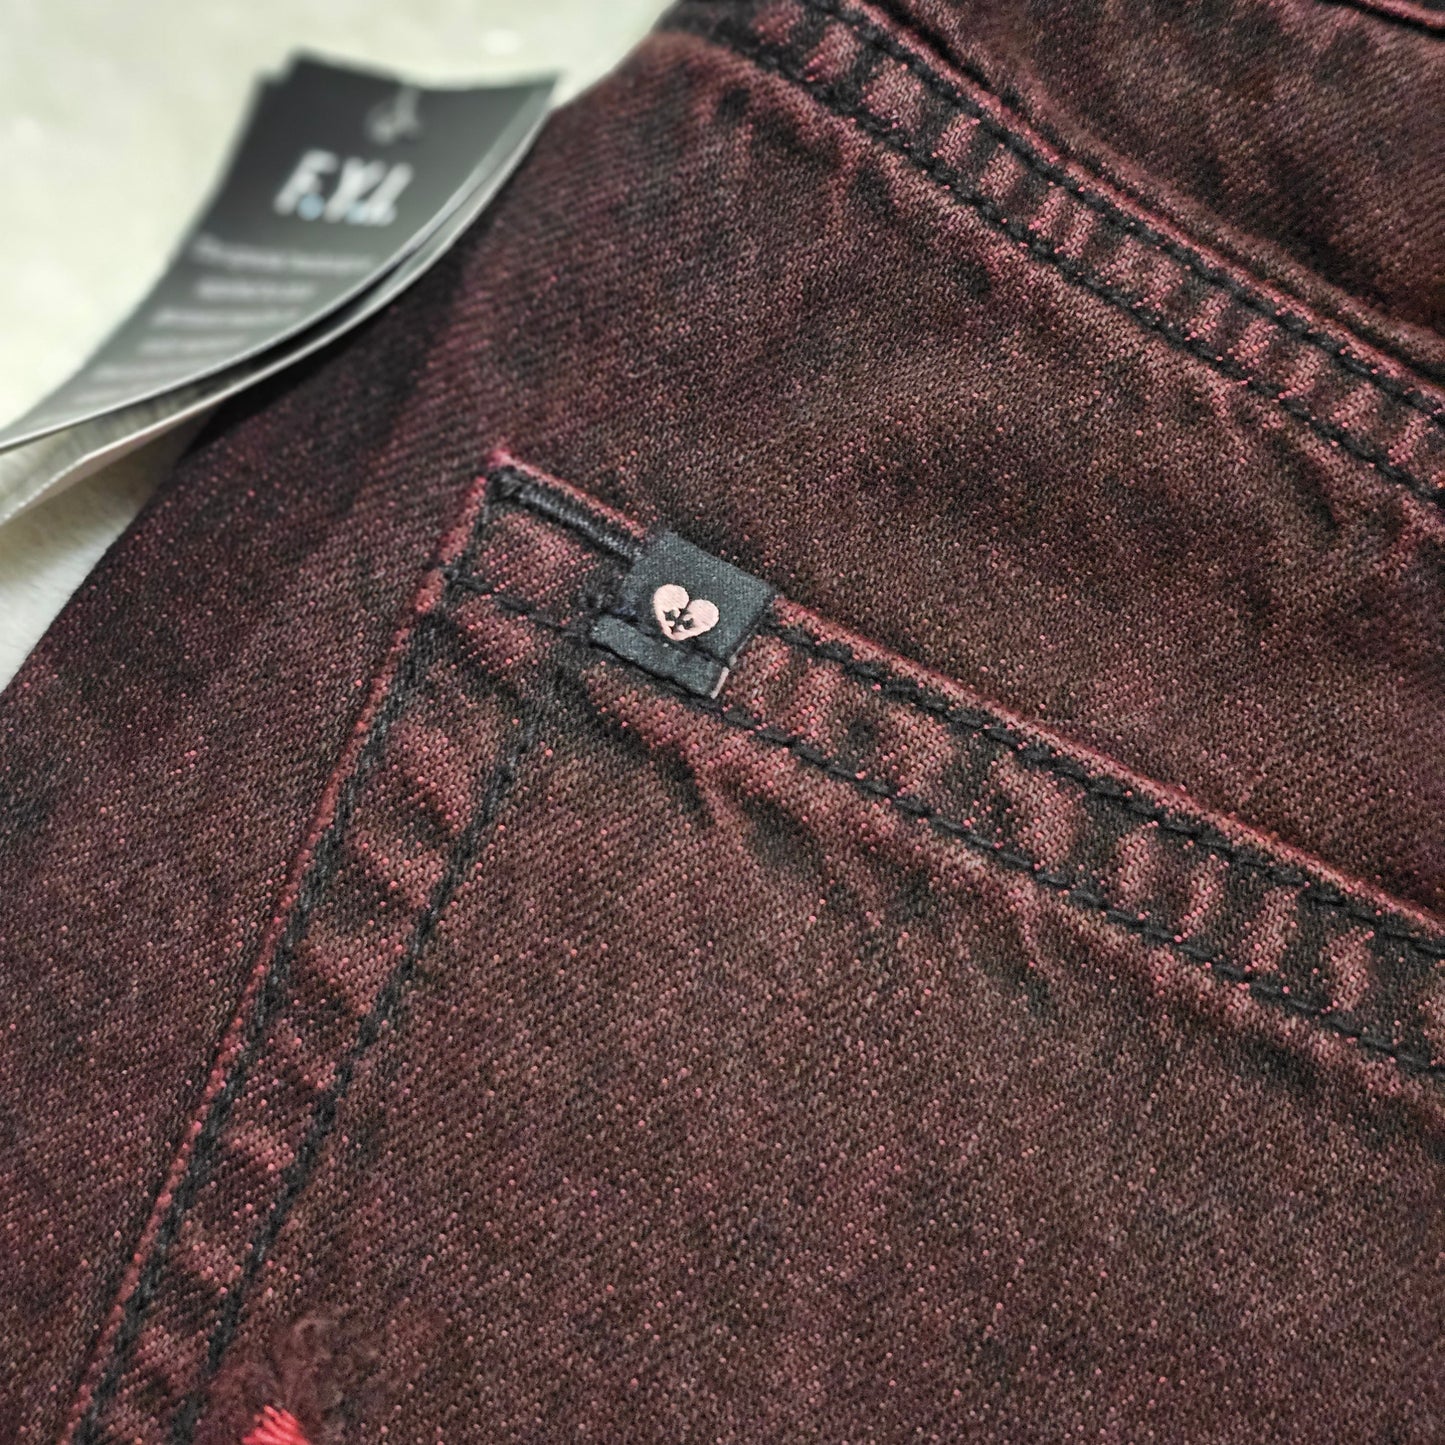 High Waisted Shorts | Red Over-Dye Distressed 5 Pocket Shorts - Blackheart - Shorts